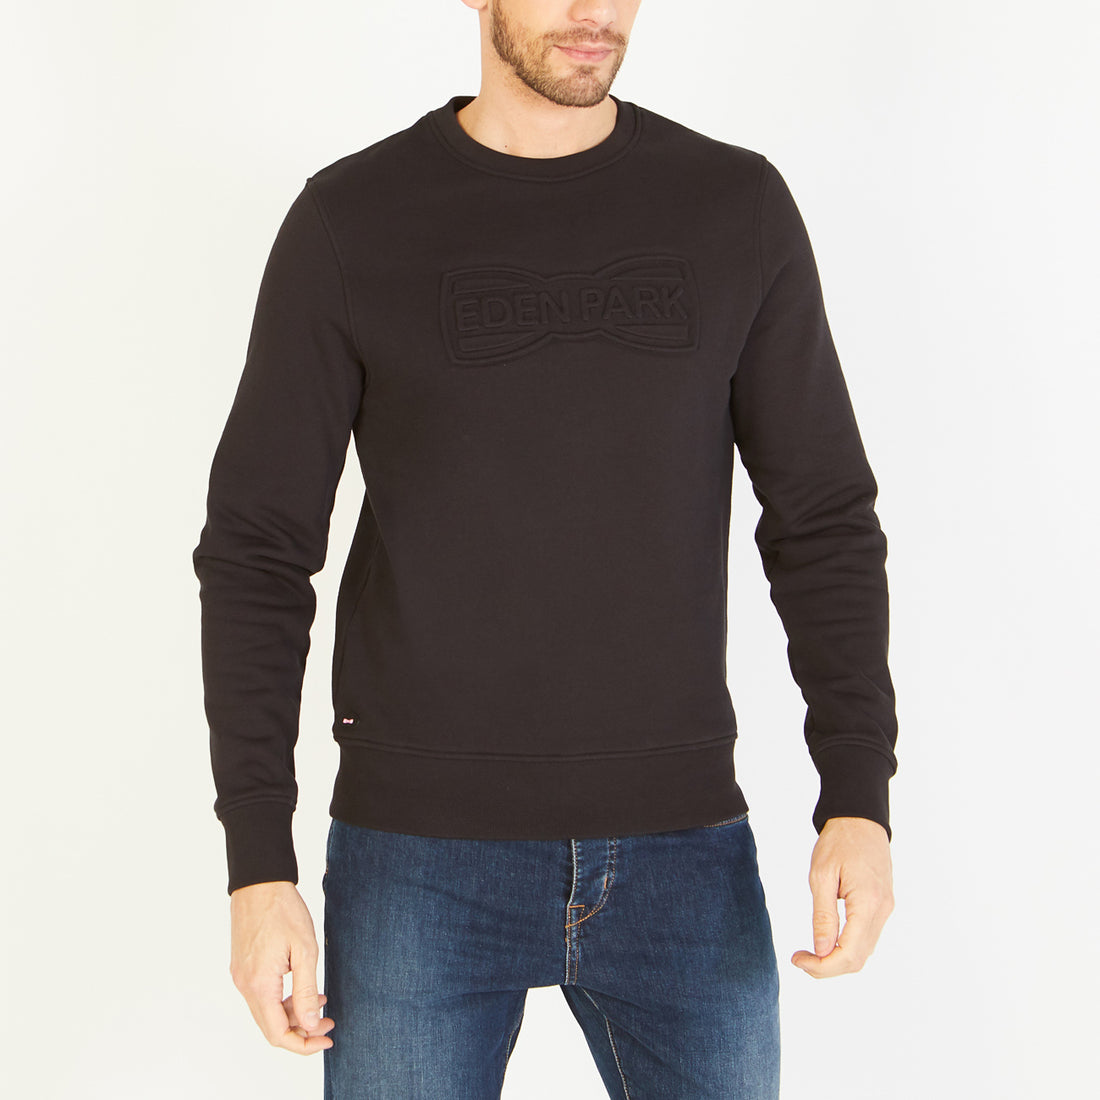 Plain Black Long-Sleeved Sweatshirt